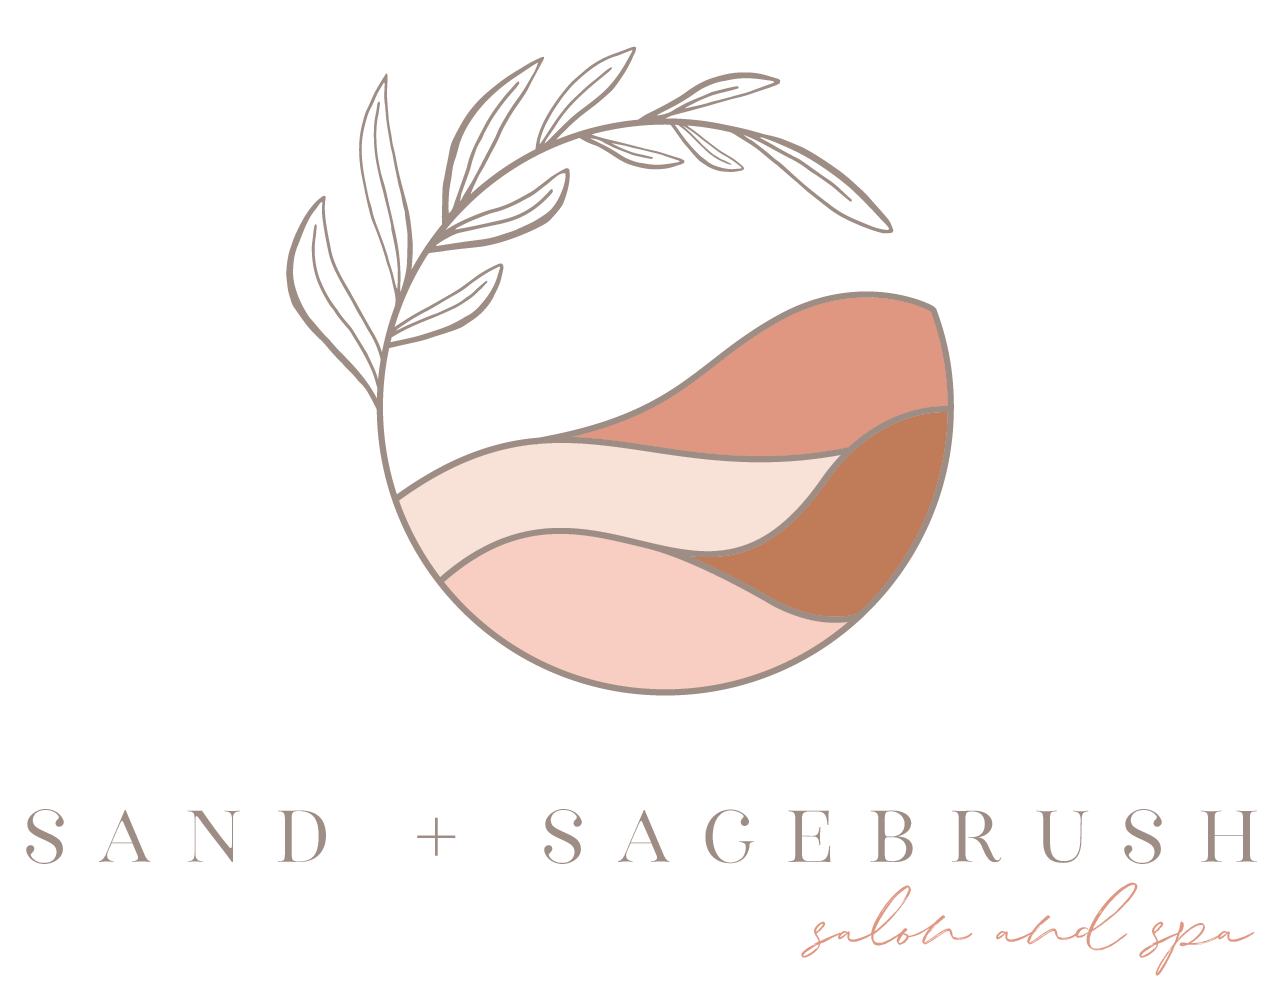 Sand and Sagebrush full color logo